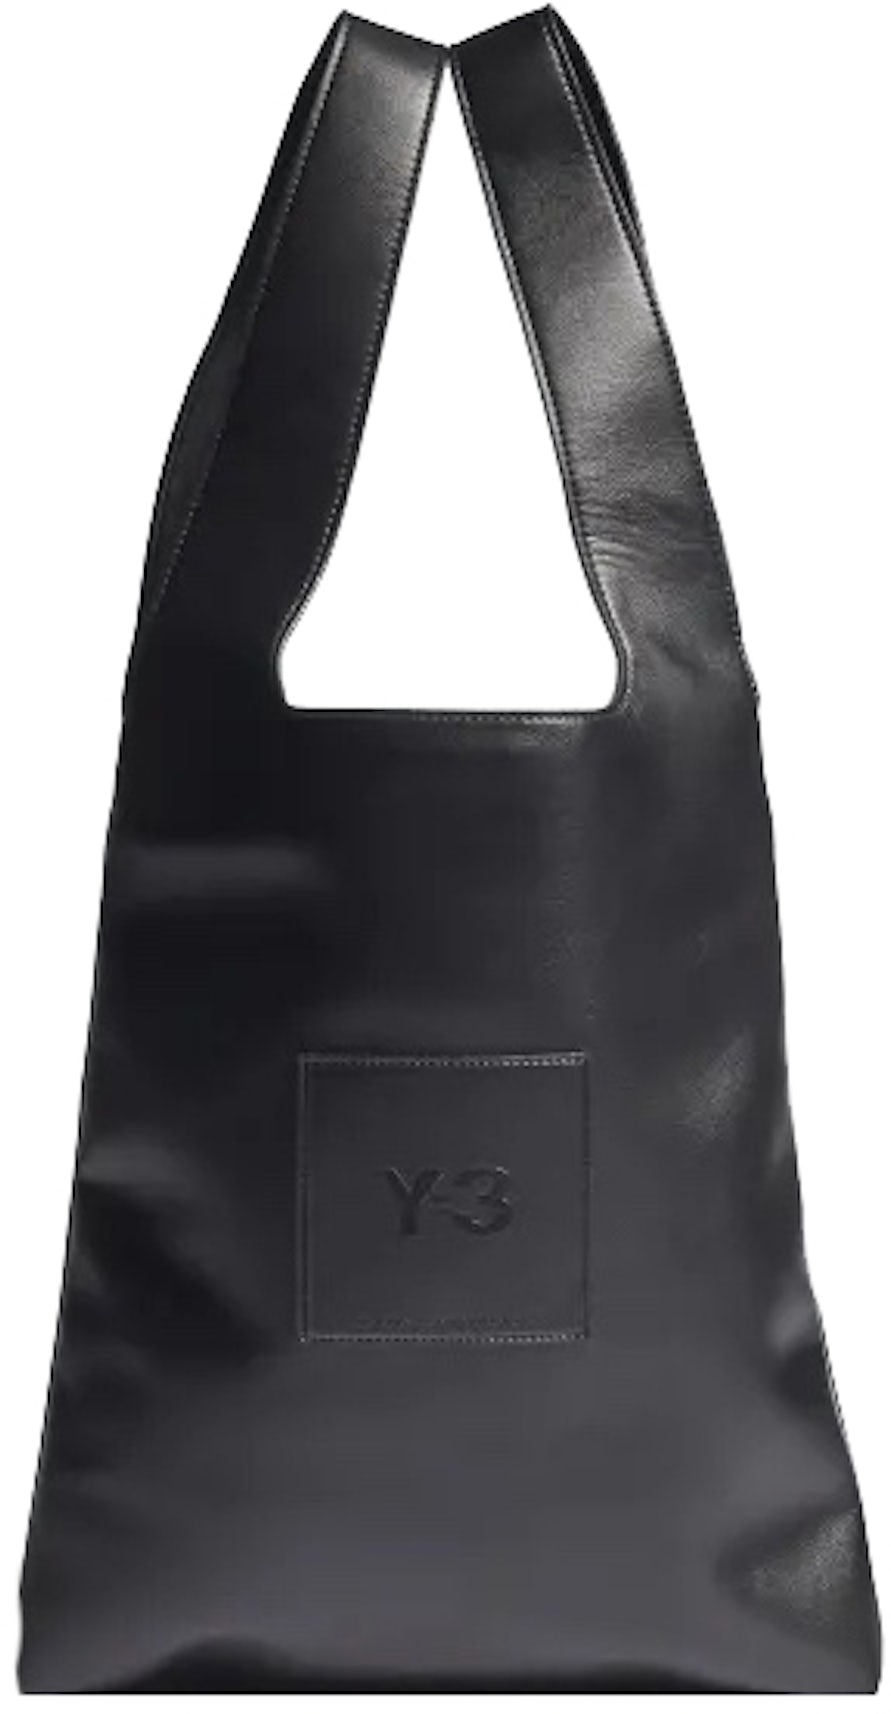 adidas Y-3 Tote Bag Black - US